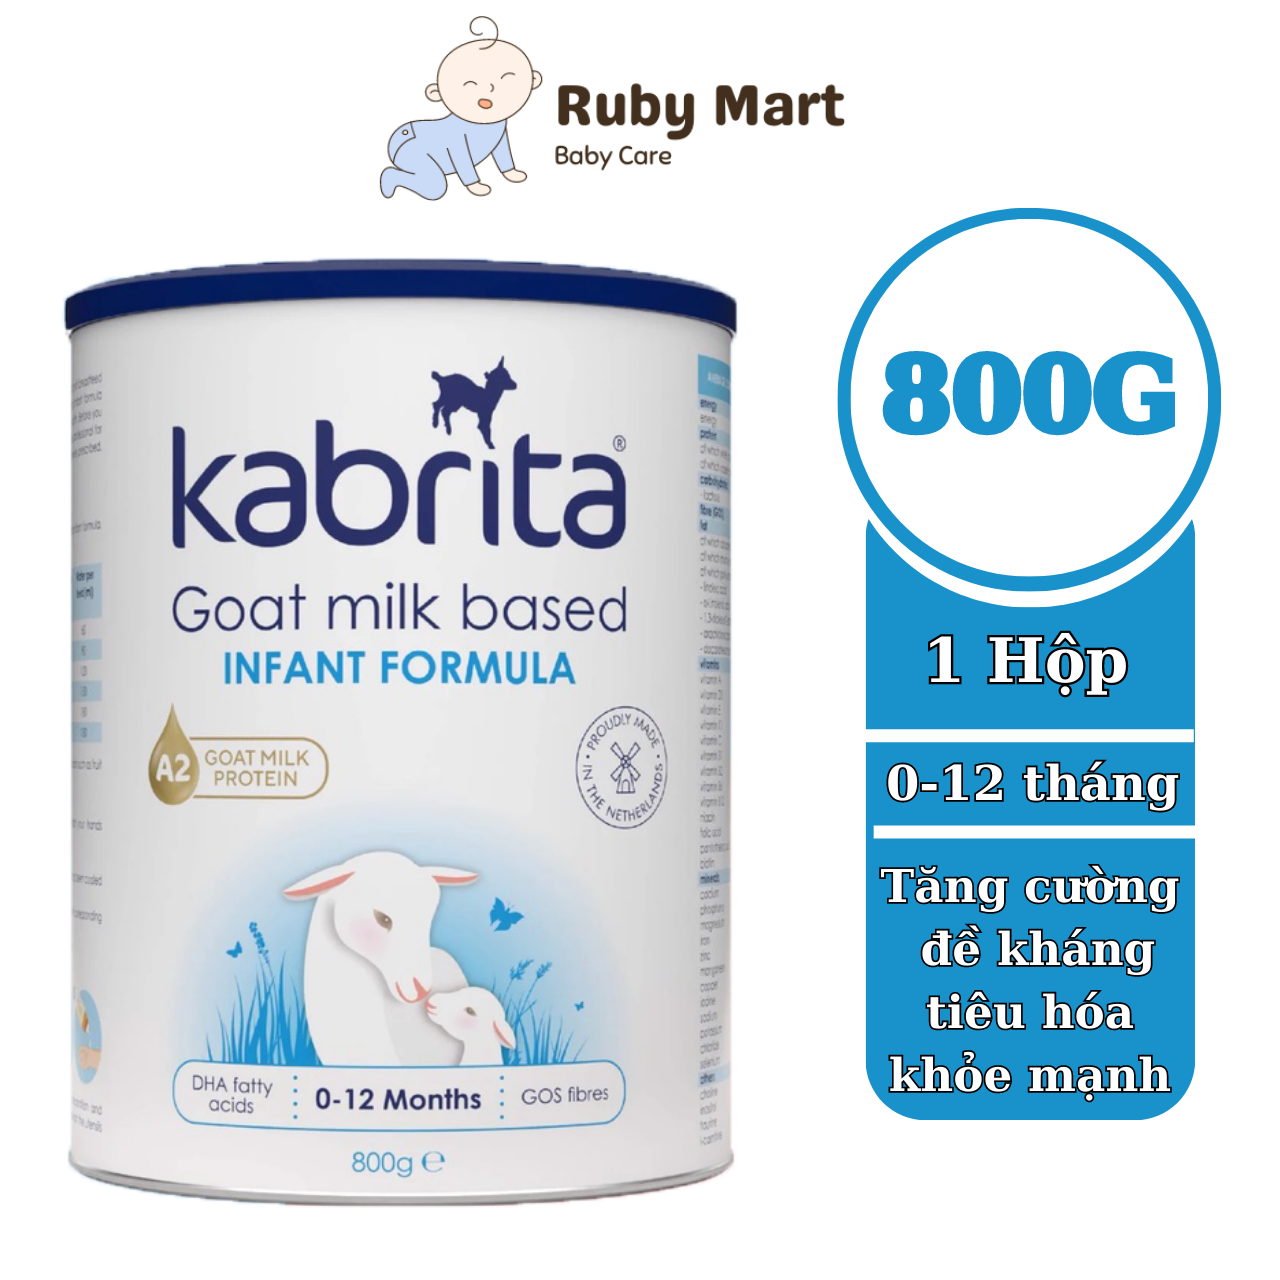 Only 1 800g kabrita goat milk for children from 0